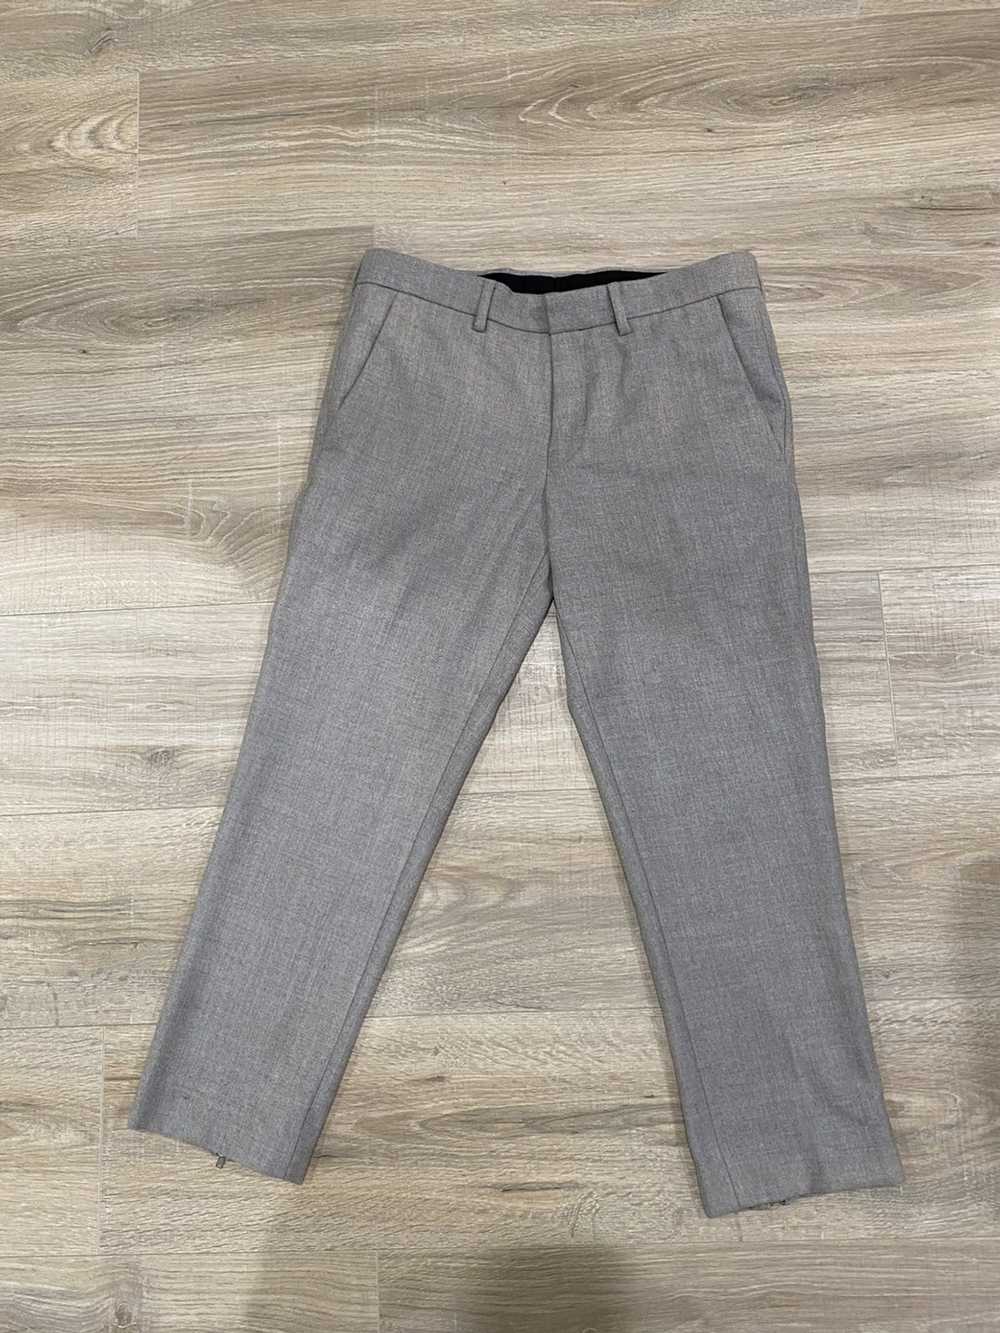 Topman Grey Trouser - image 1